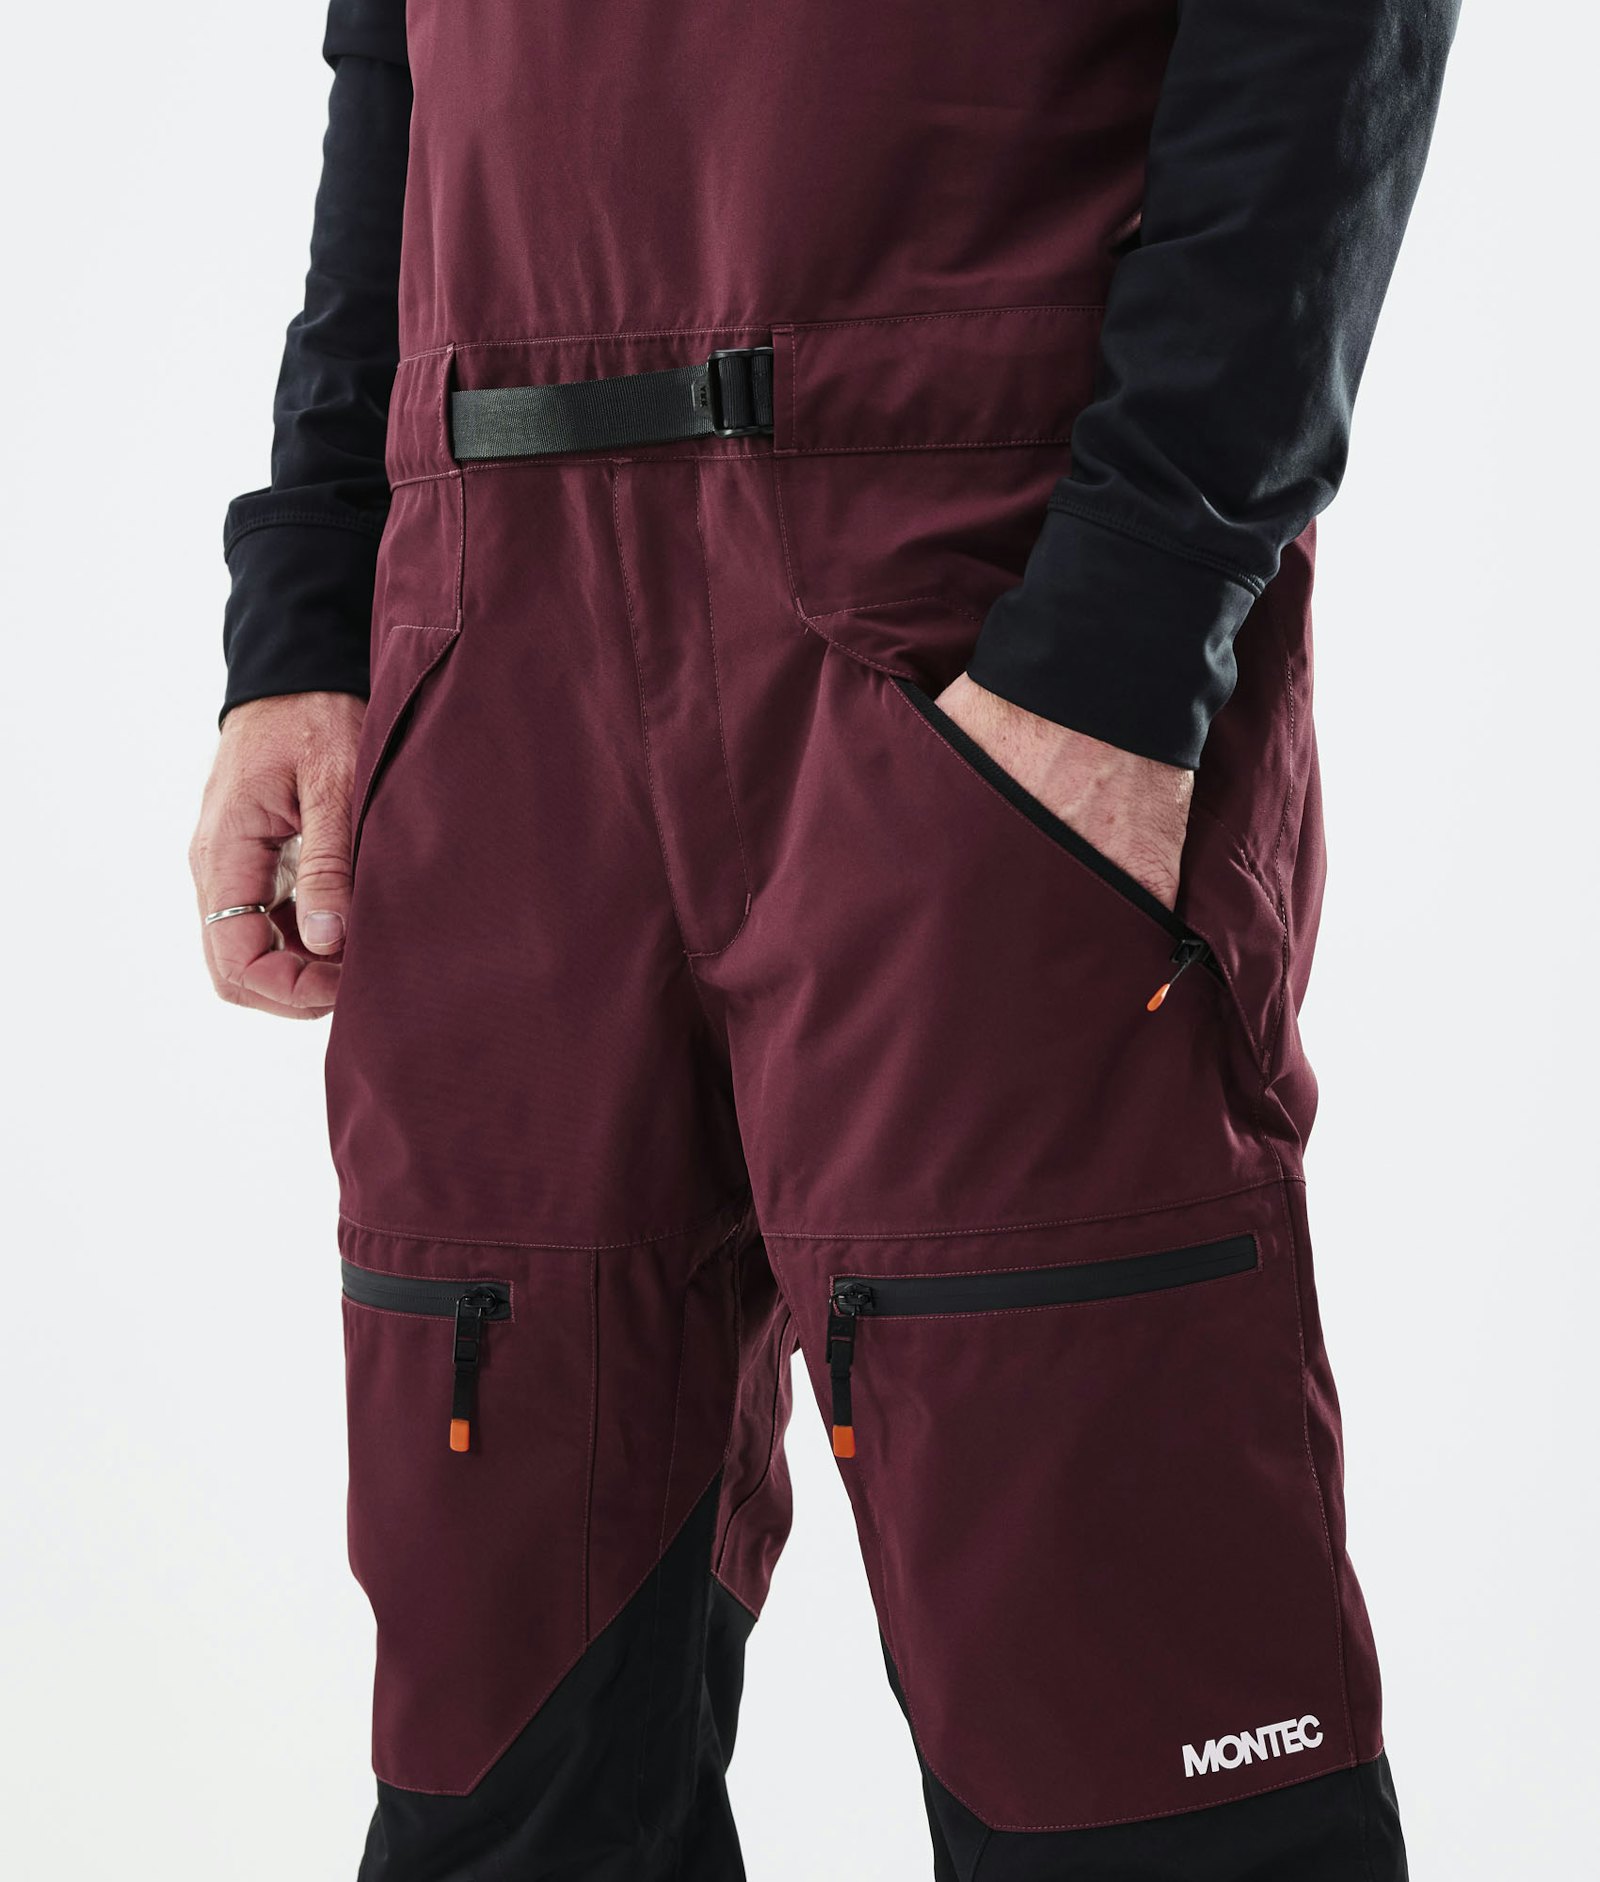 Moss 2021 Snowboard Pants Men Burgundy/Black Renewed